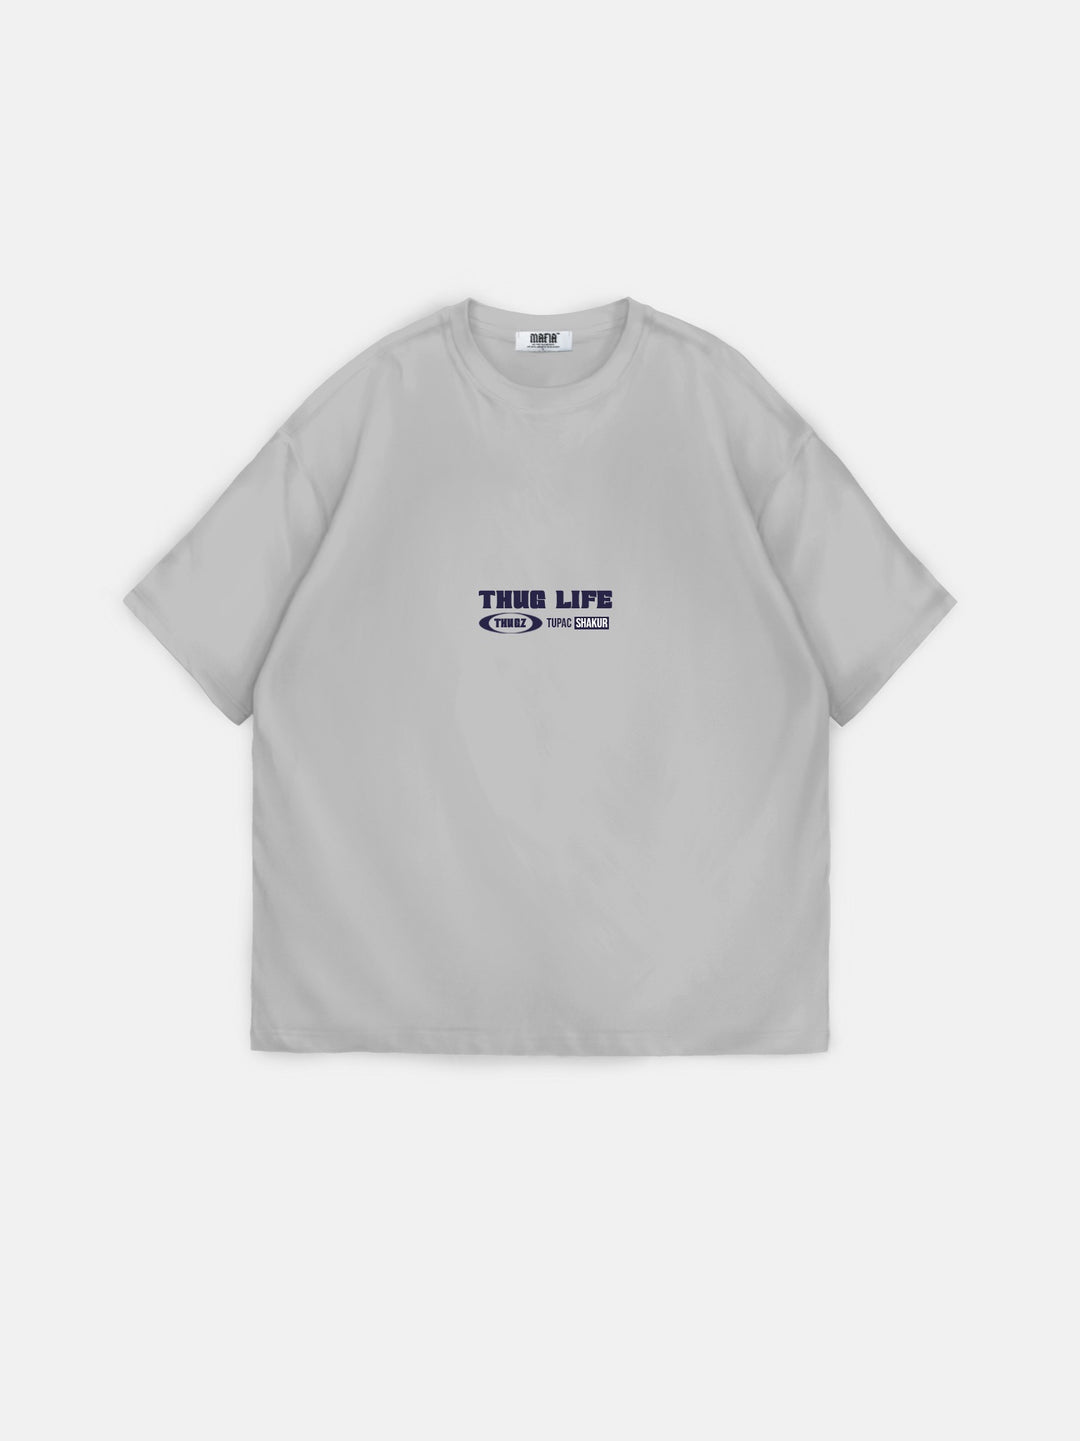 Oversize Thug Life T-Shirt - Grey